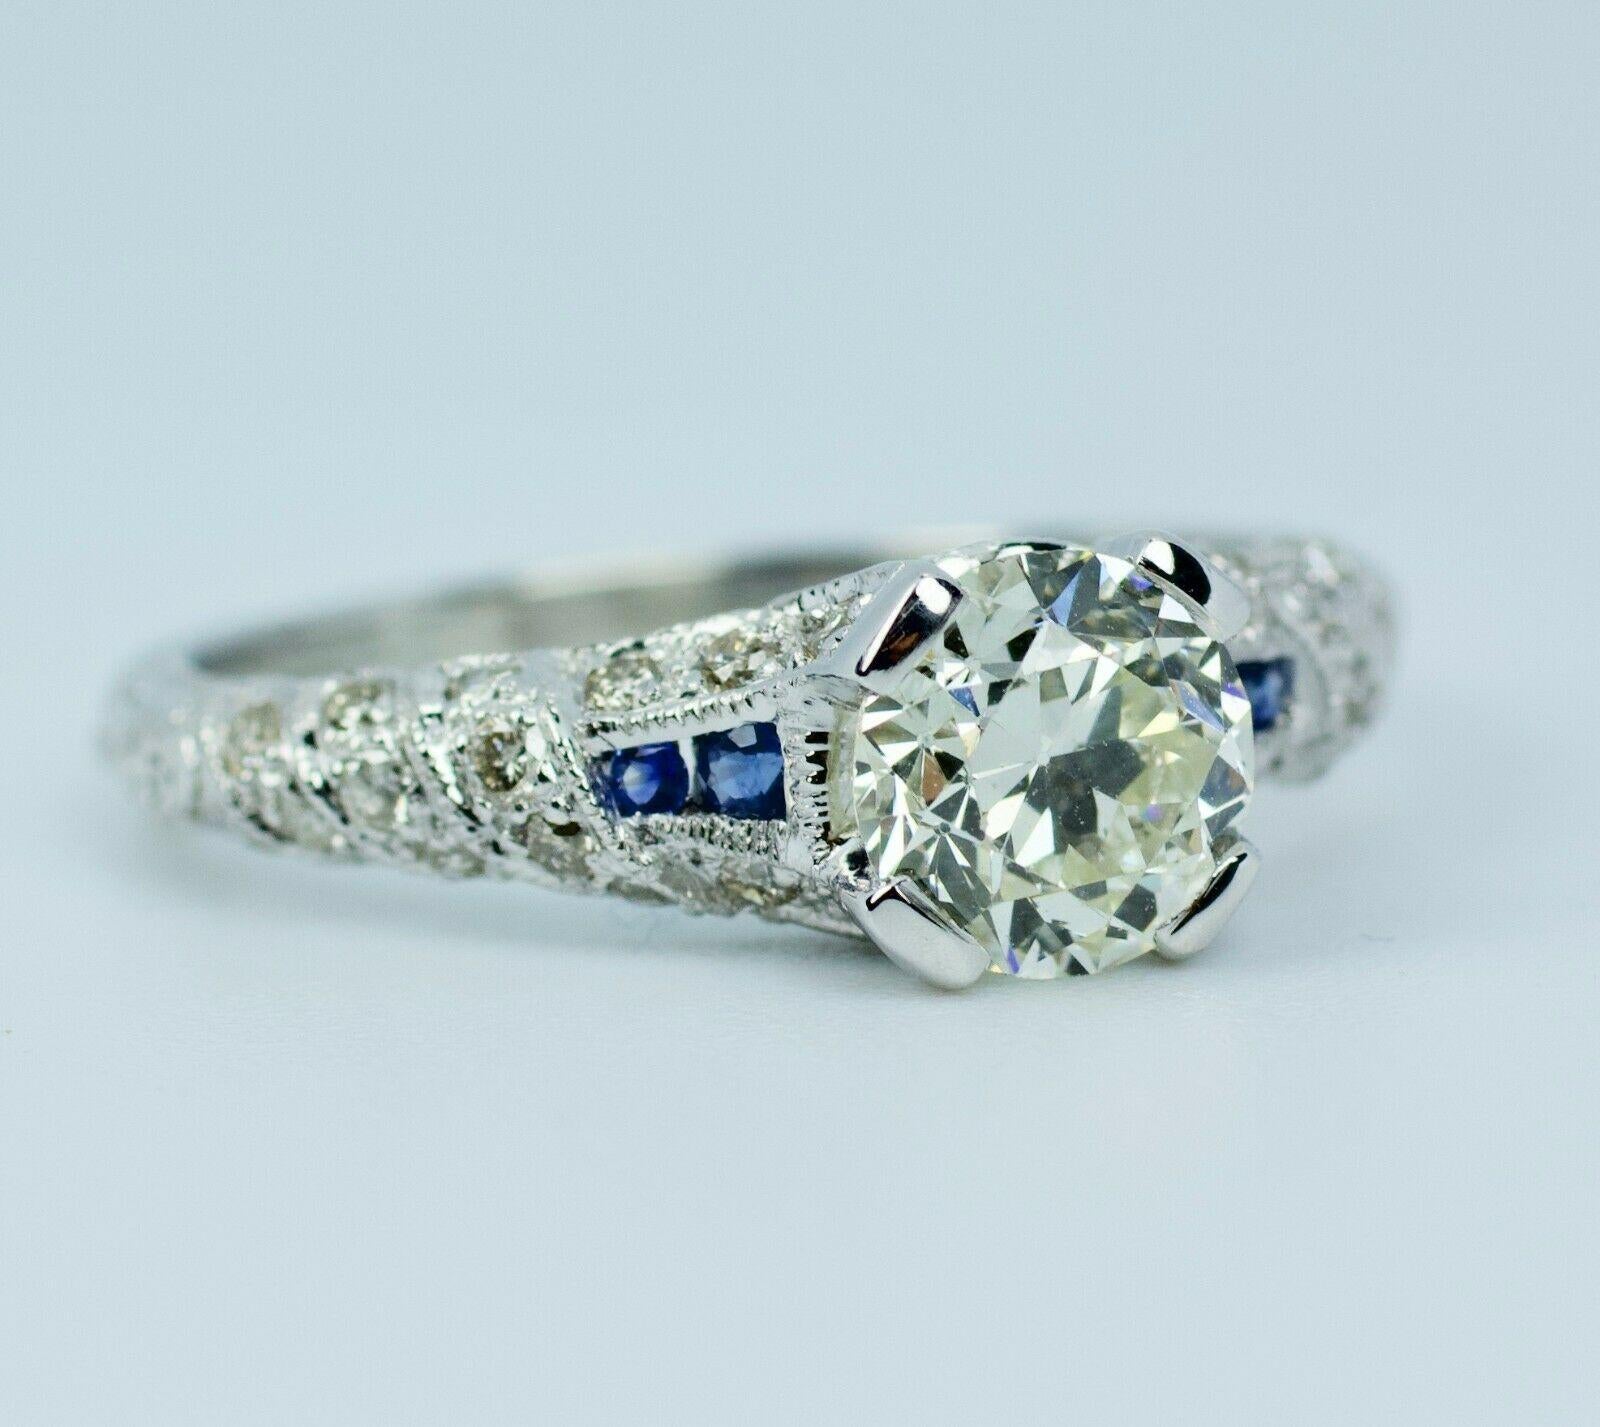 Vintage 14k White Gold European Cut Center W/ Sapphire & Single Cut Diamond Ring 2